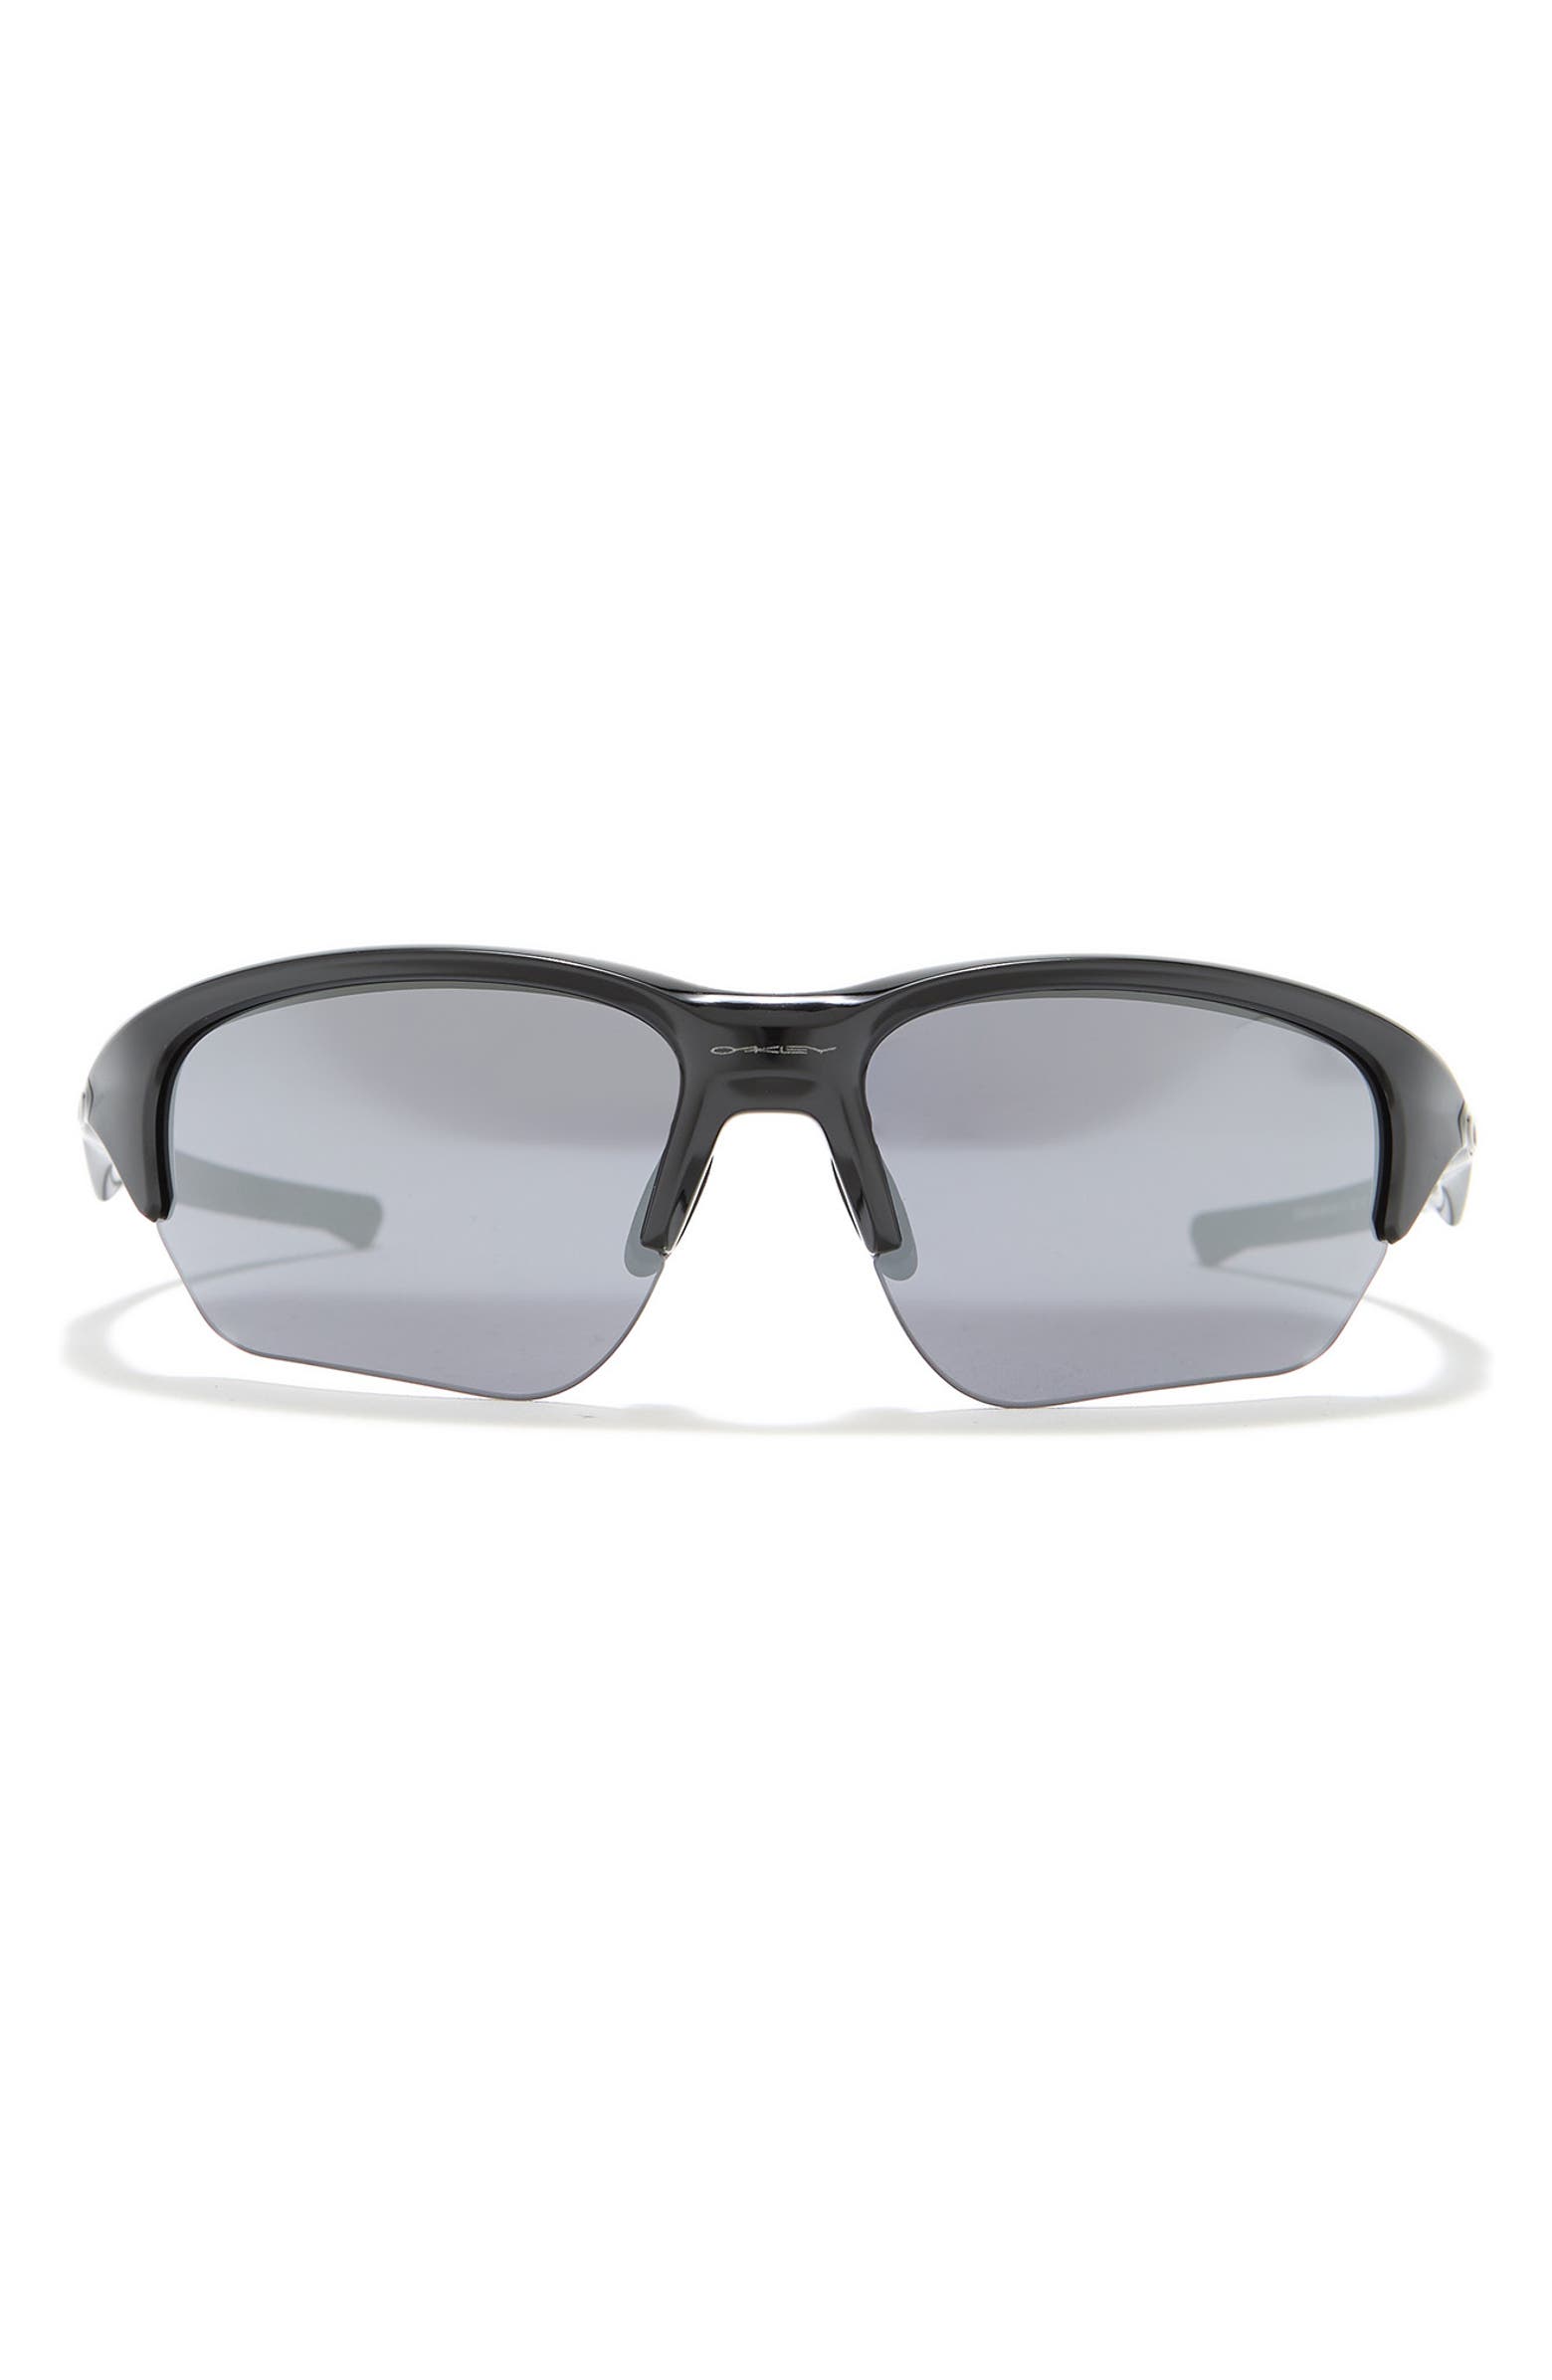 OAKLEY 64mm Half Frame Sunglasses Polished Black / Black Iridium $47.98